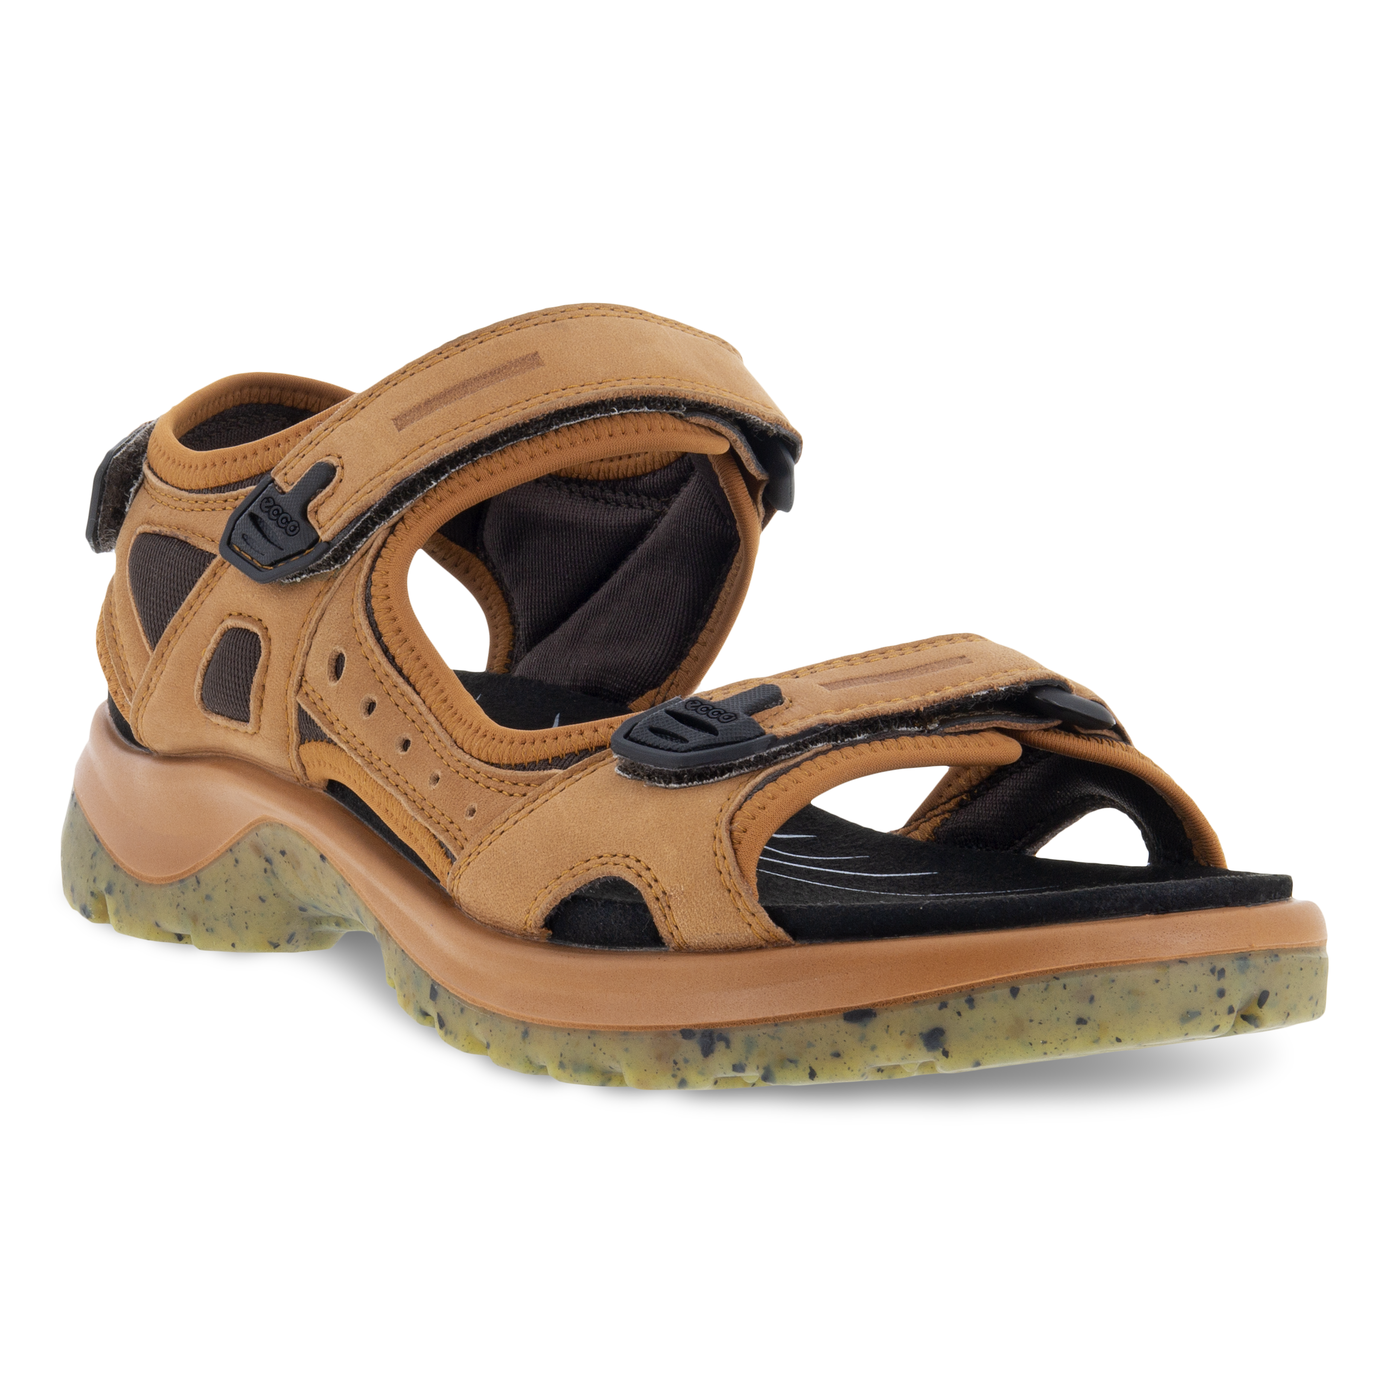 Offroad Sierra W 822183 - shoe&amp;me - Ecco - Sandal - Sandals, Summer, Womens